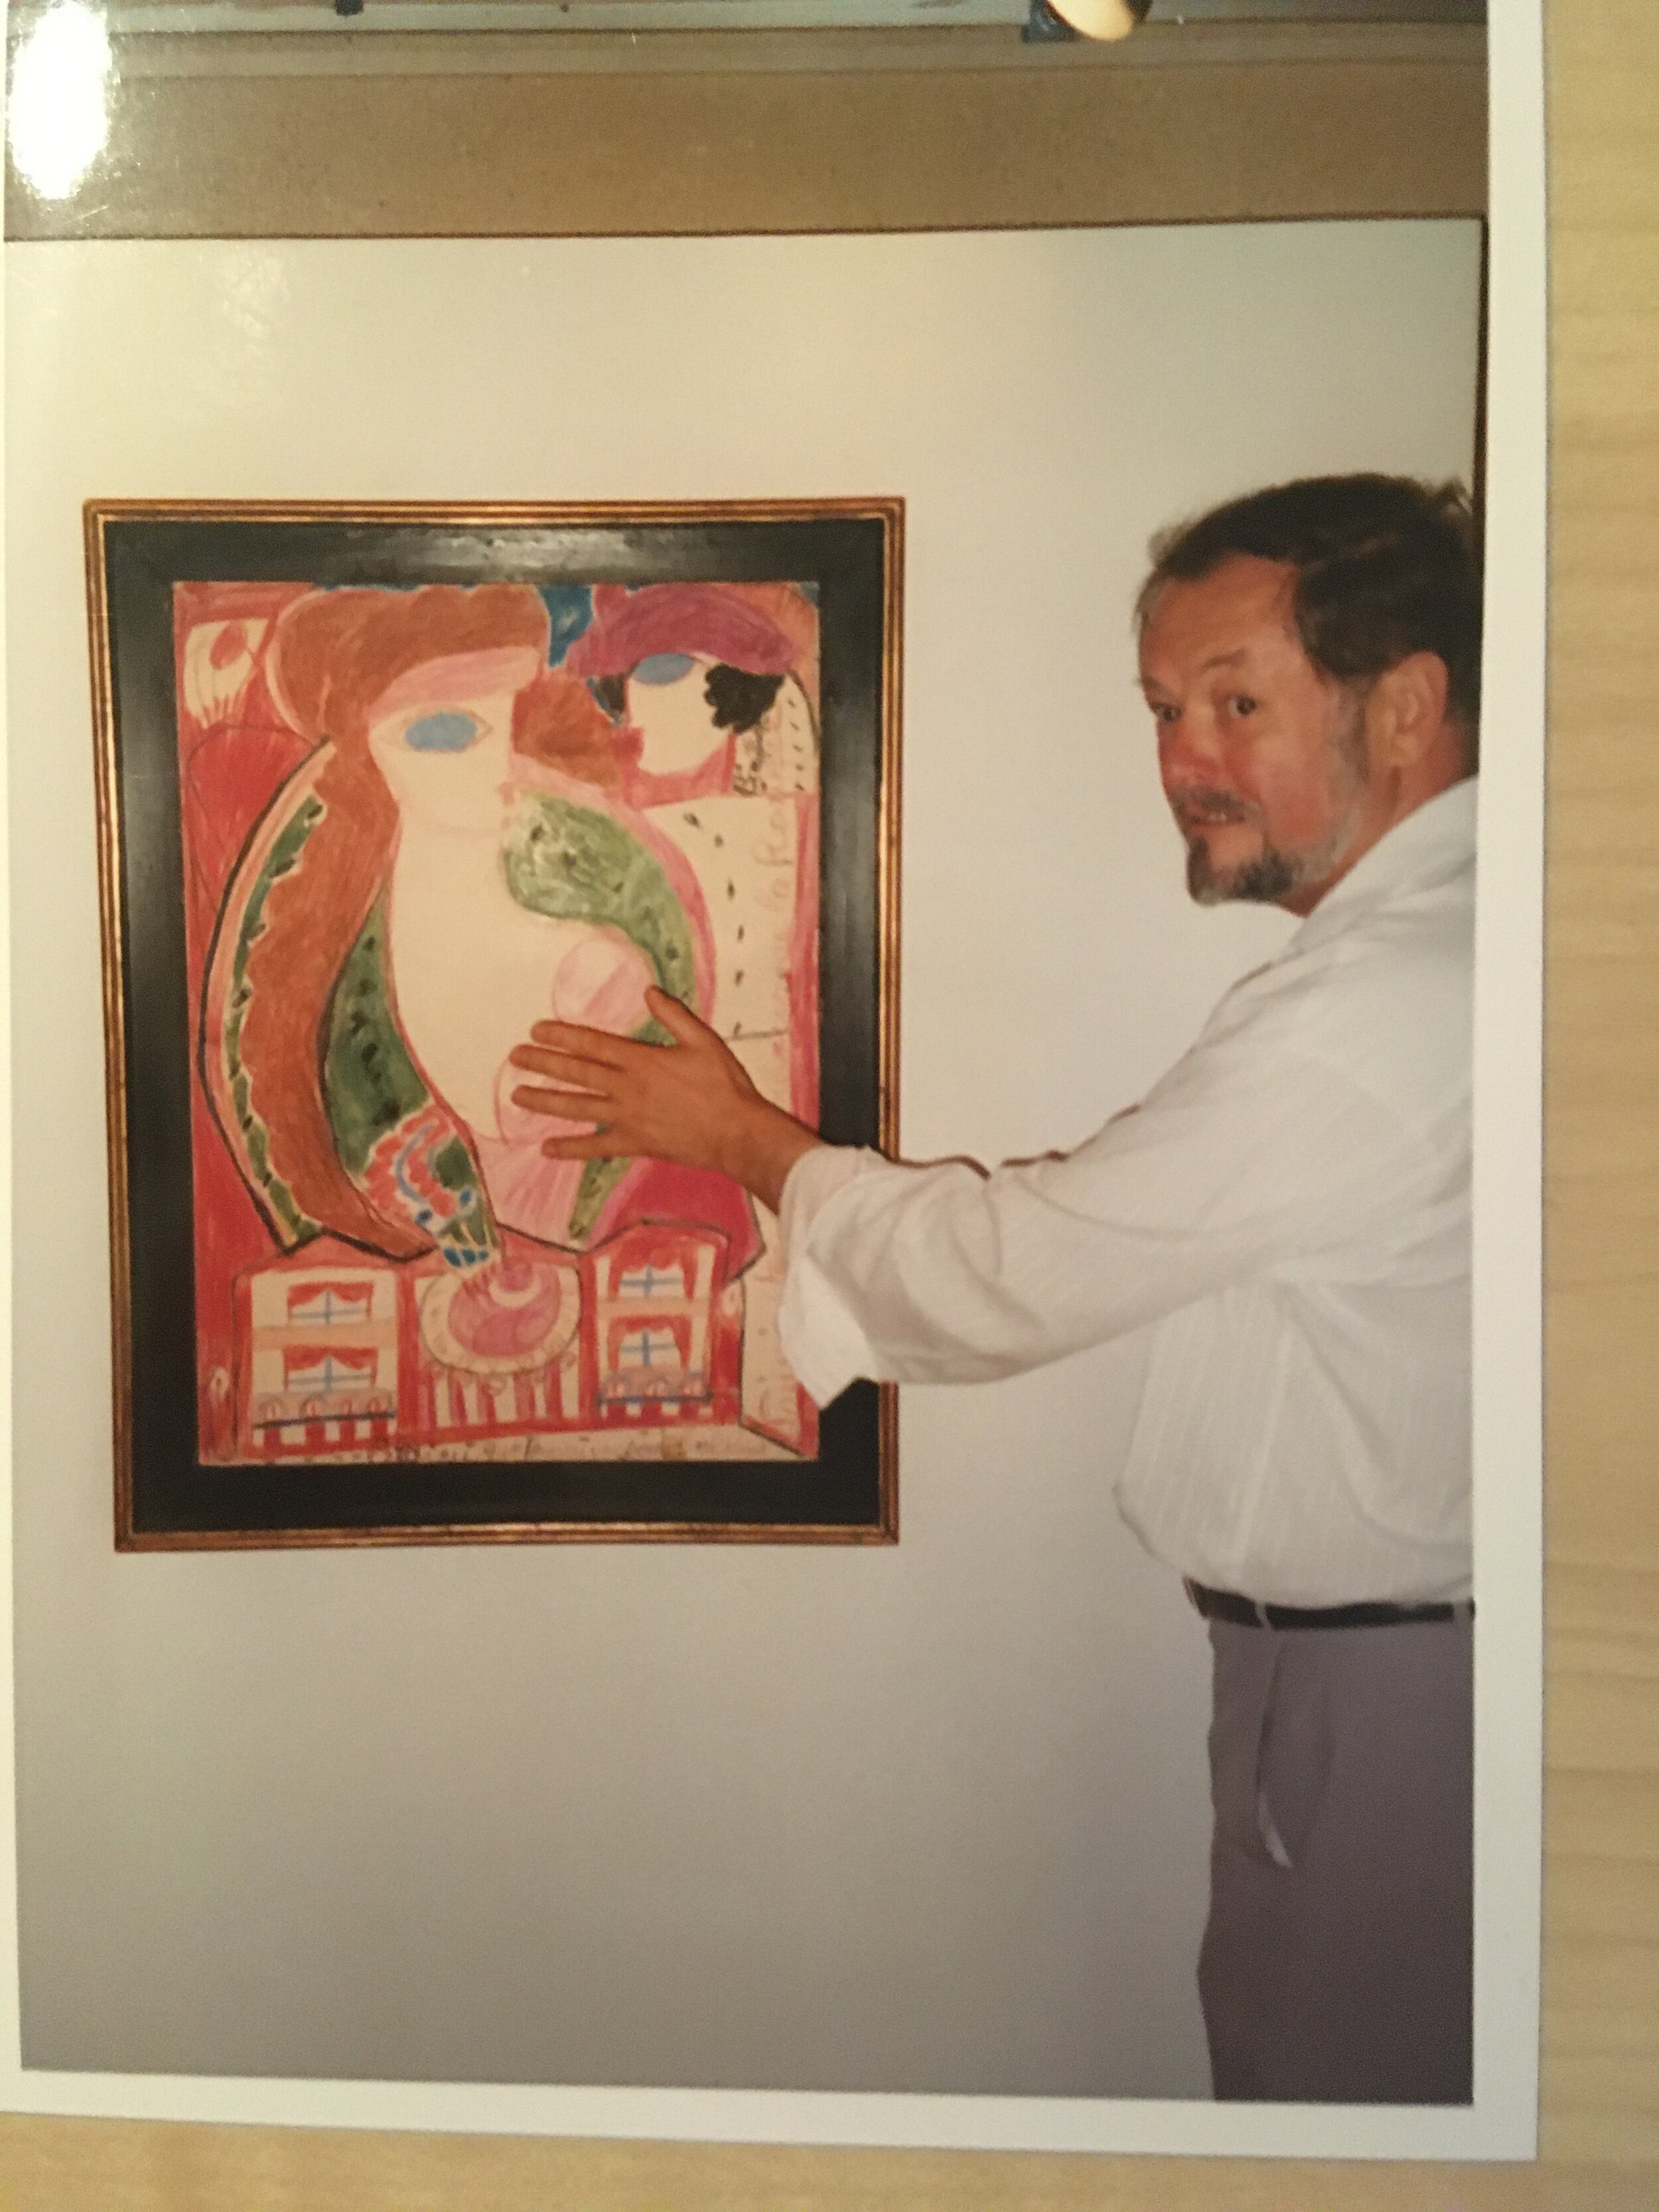  Roger with an Aloise Corbaz artwork 